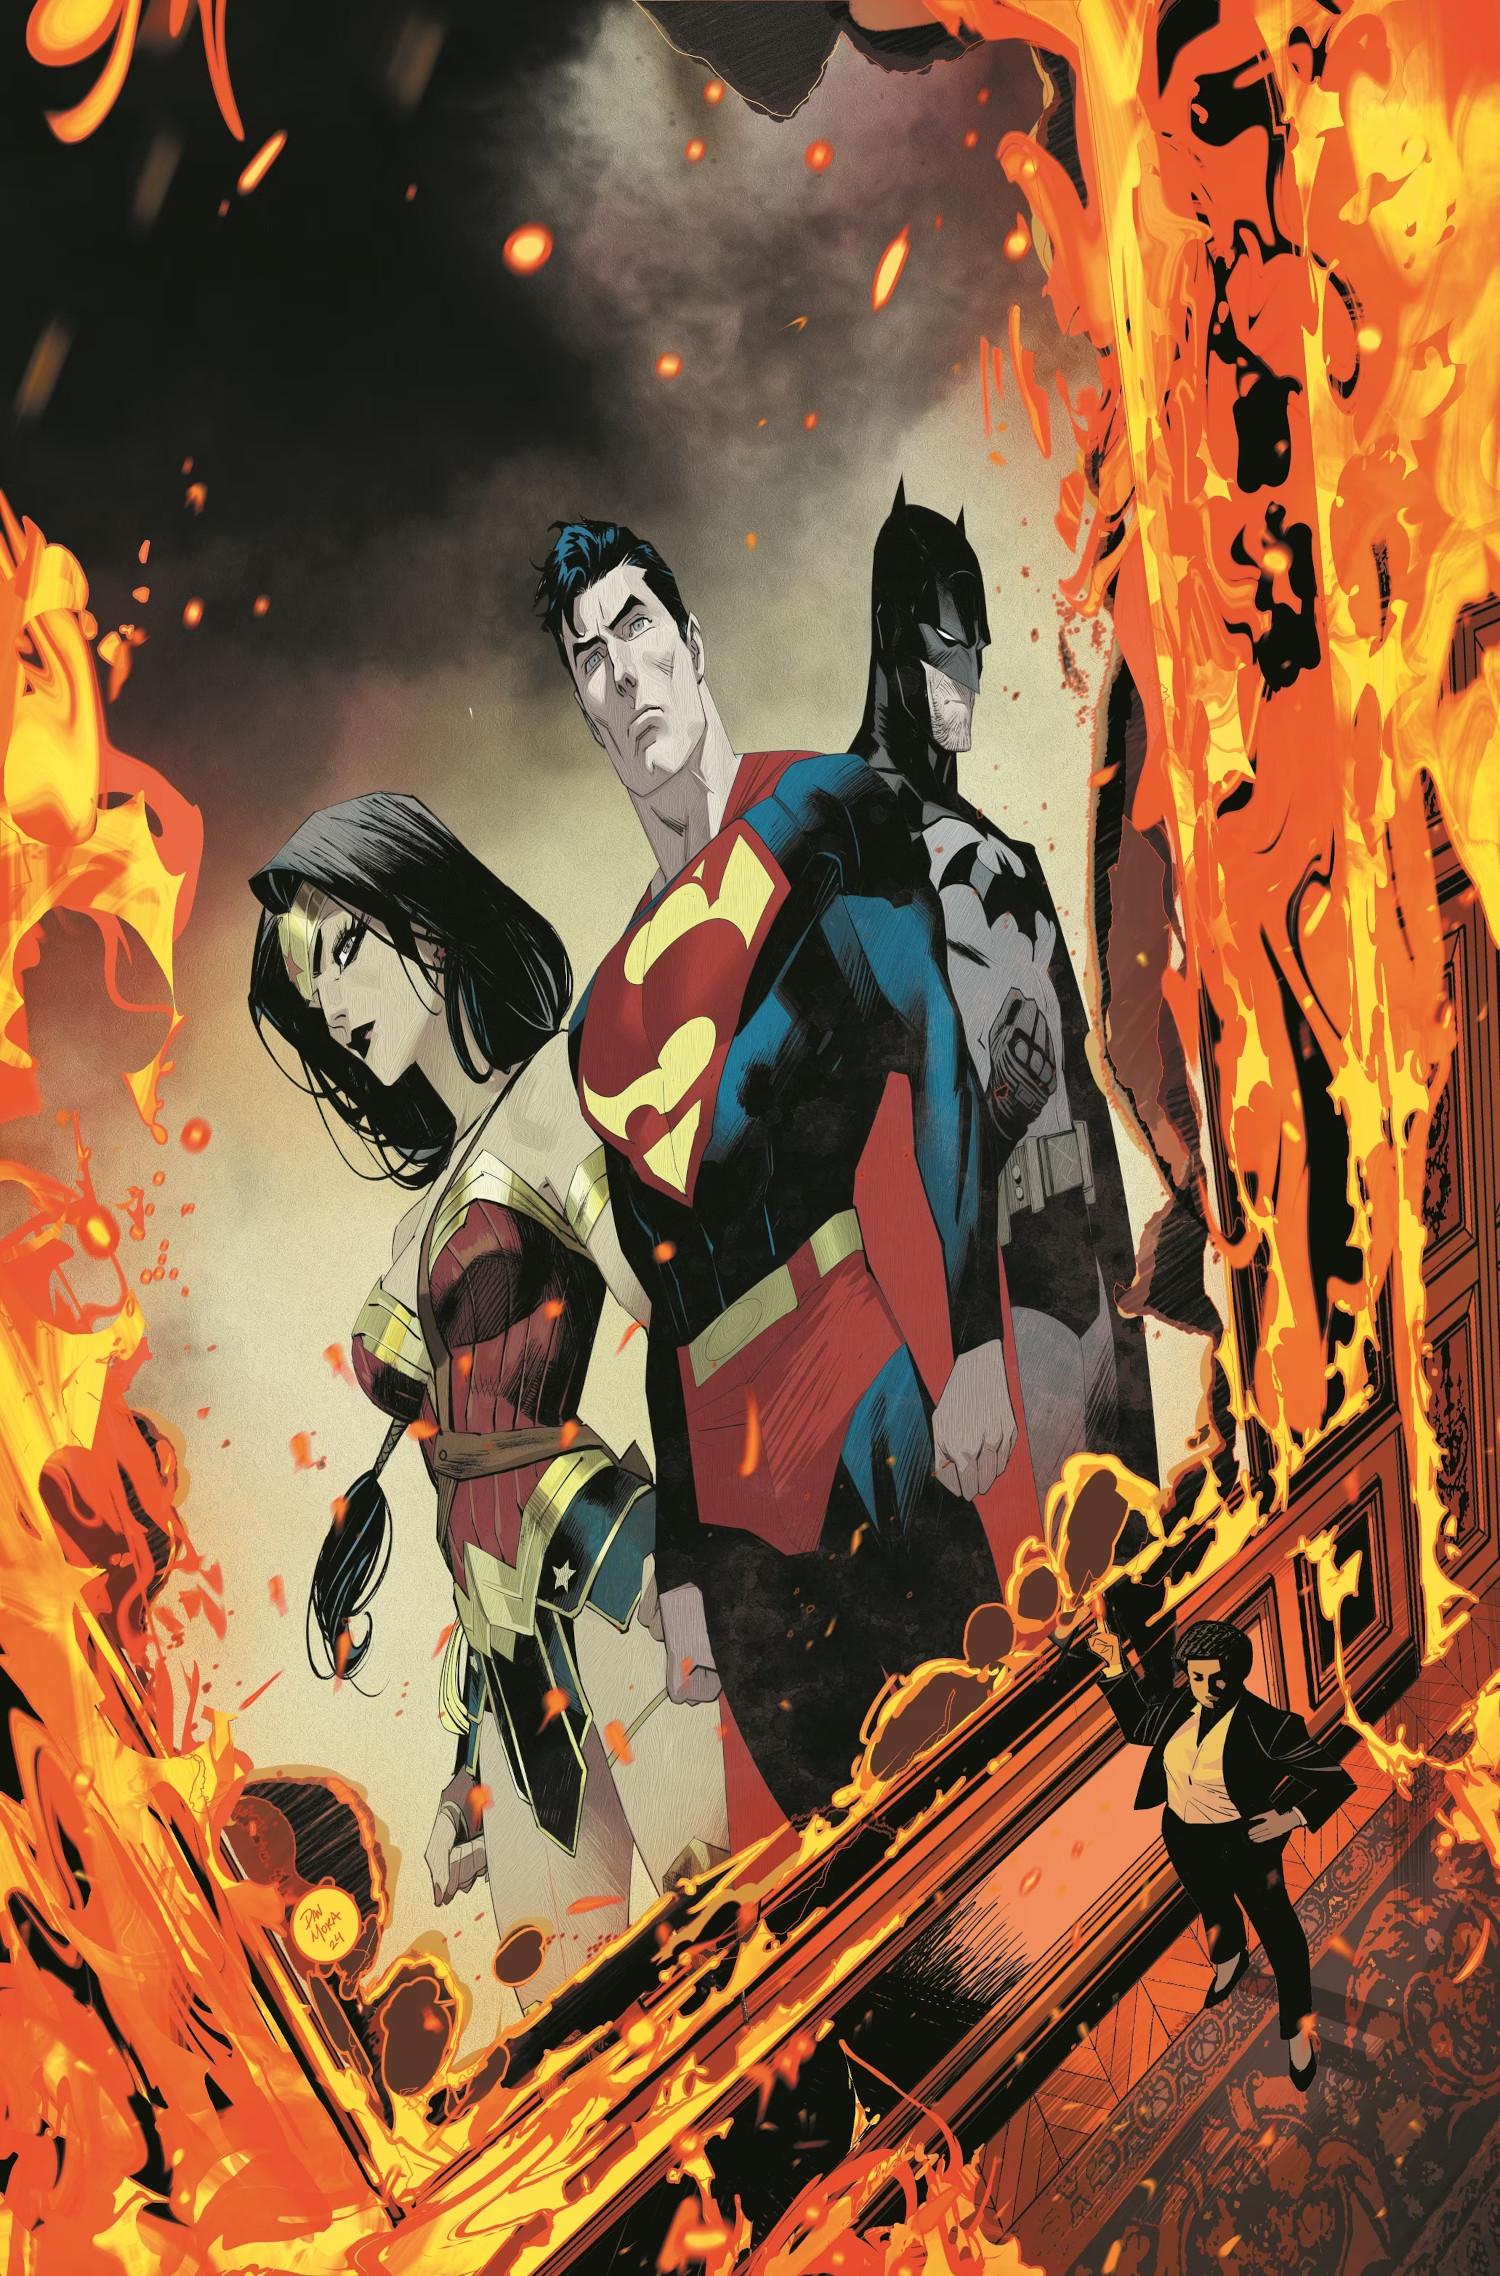 DC Comics Absolute Power Ground Zero #1 cover art